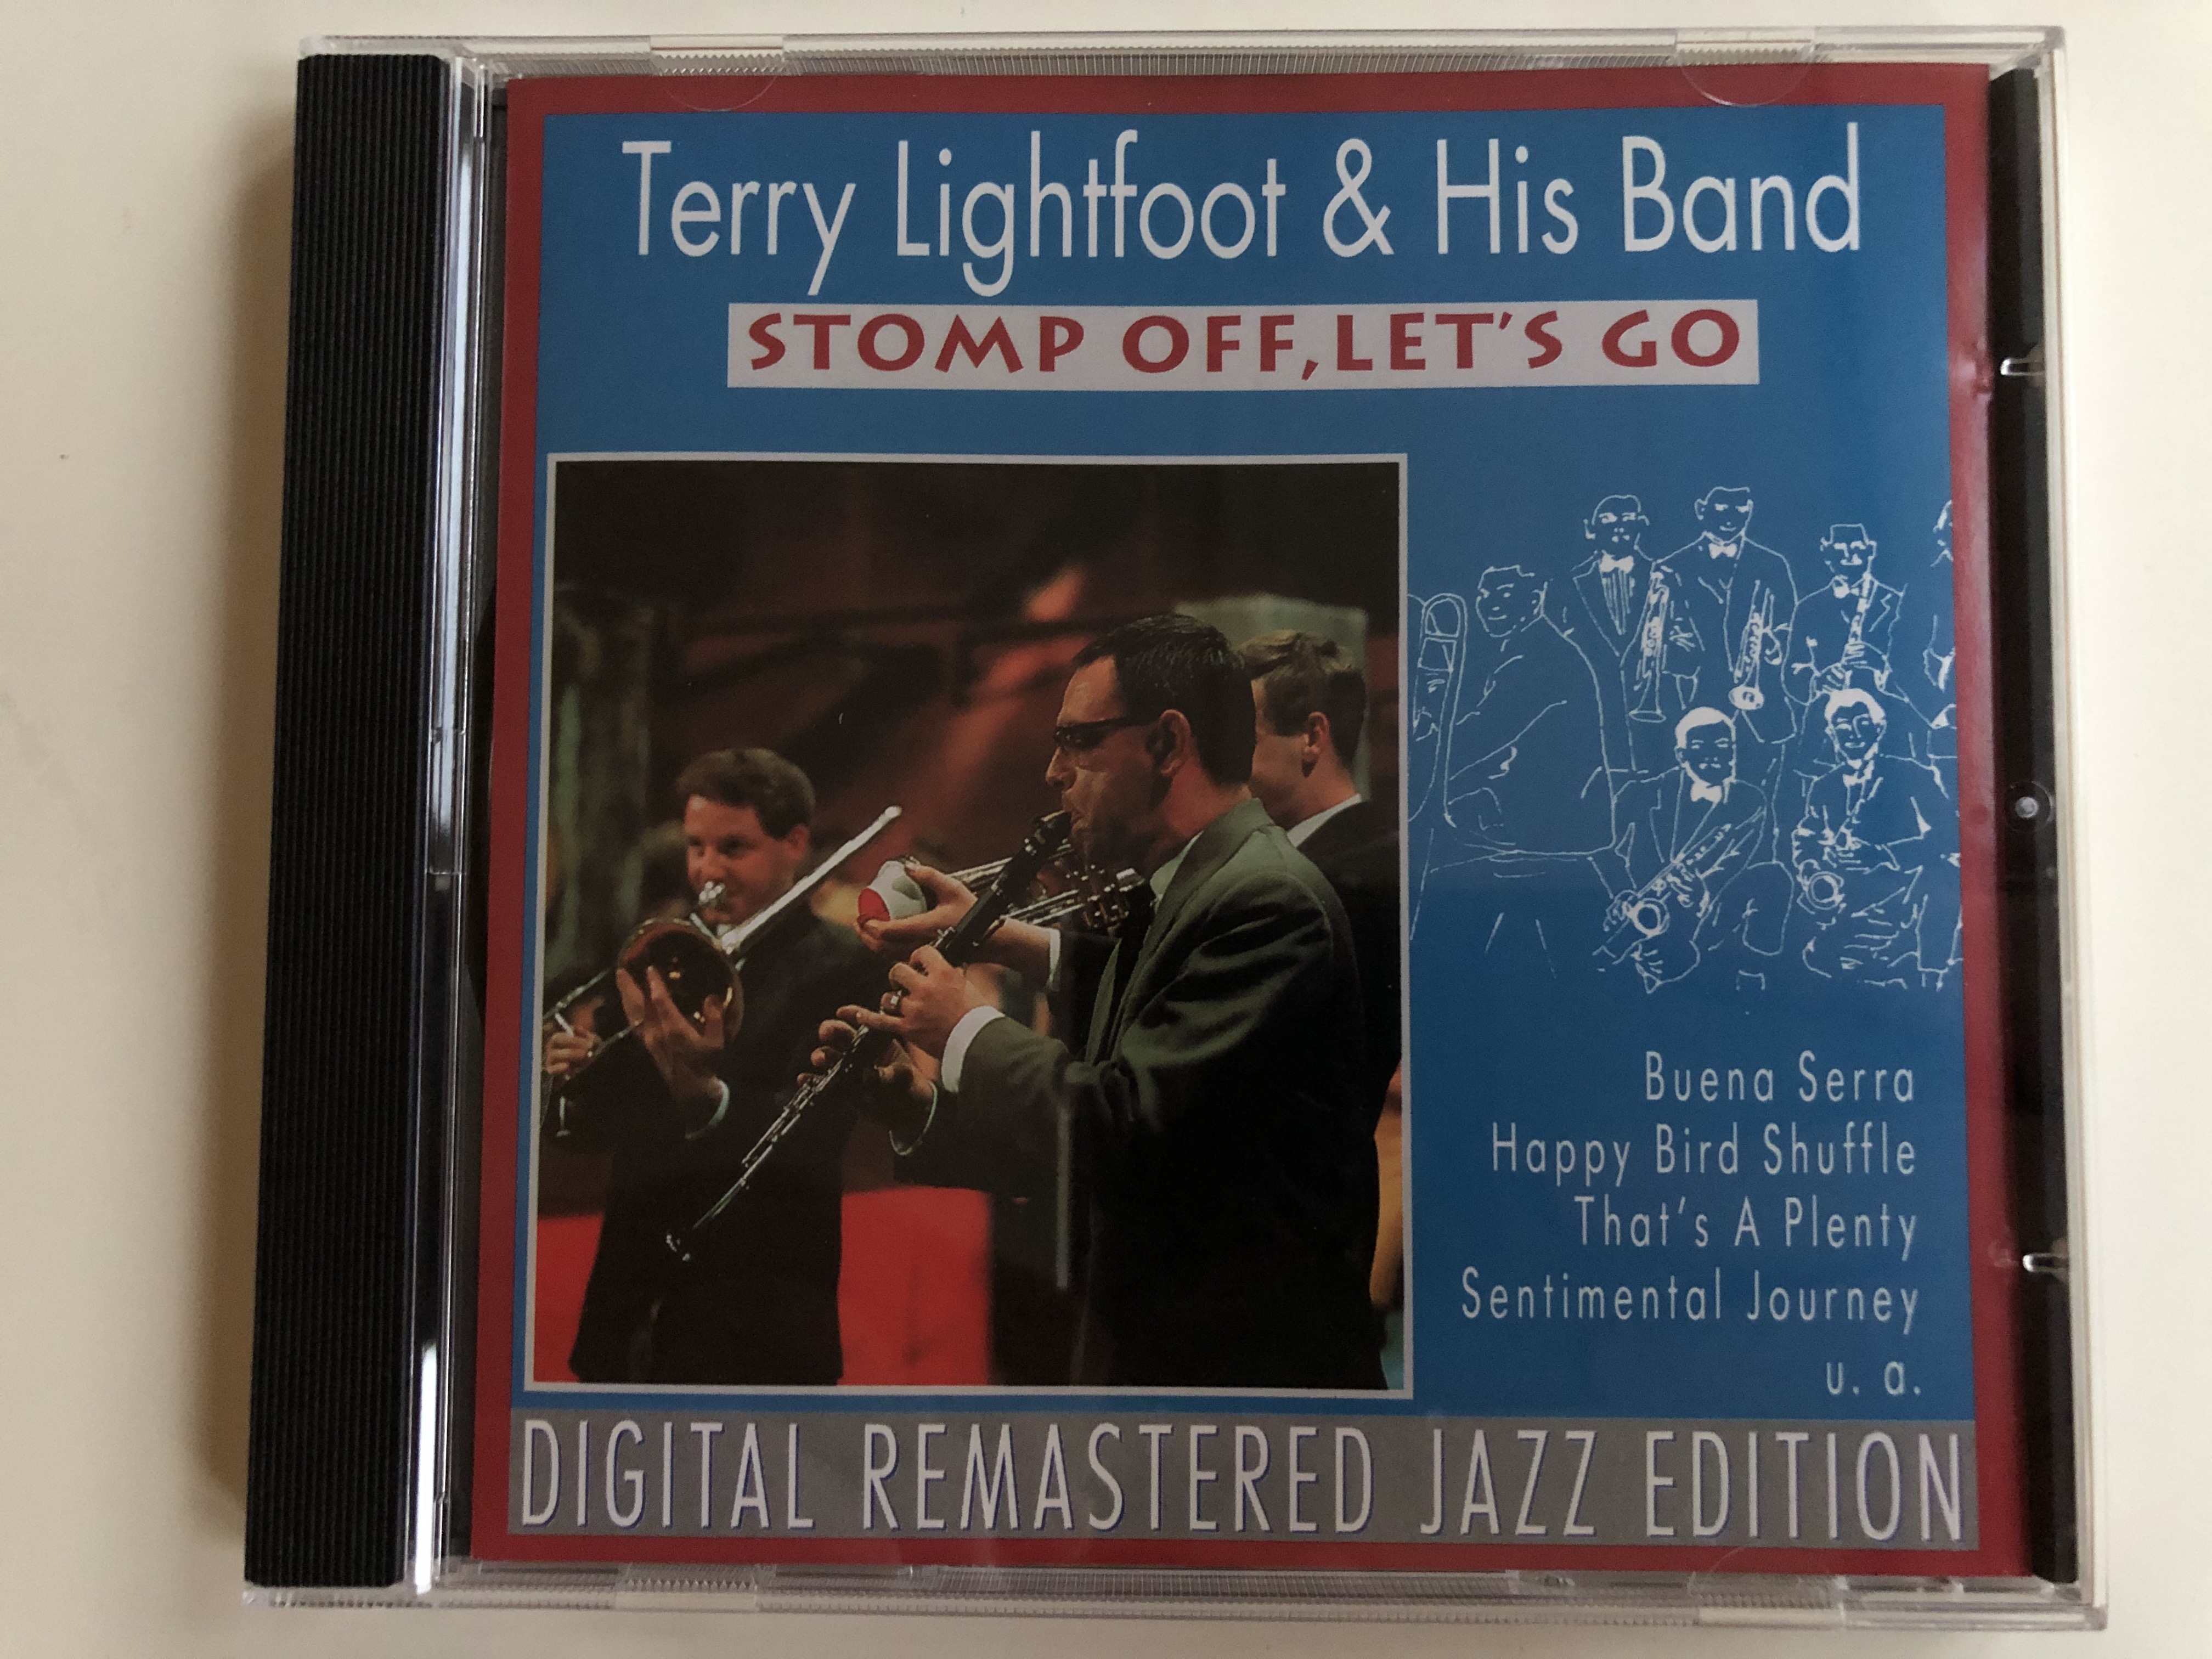 terry-lightfoot-his-band-stomp-off-let-s-go-buena-serra-happy-bird-shuffle-that-s-a-plenty-sentimental-journey-u.a.-digital-remastered-jazz-edition-pastels-audio-cd-1995-cd-20-1-.jpg